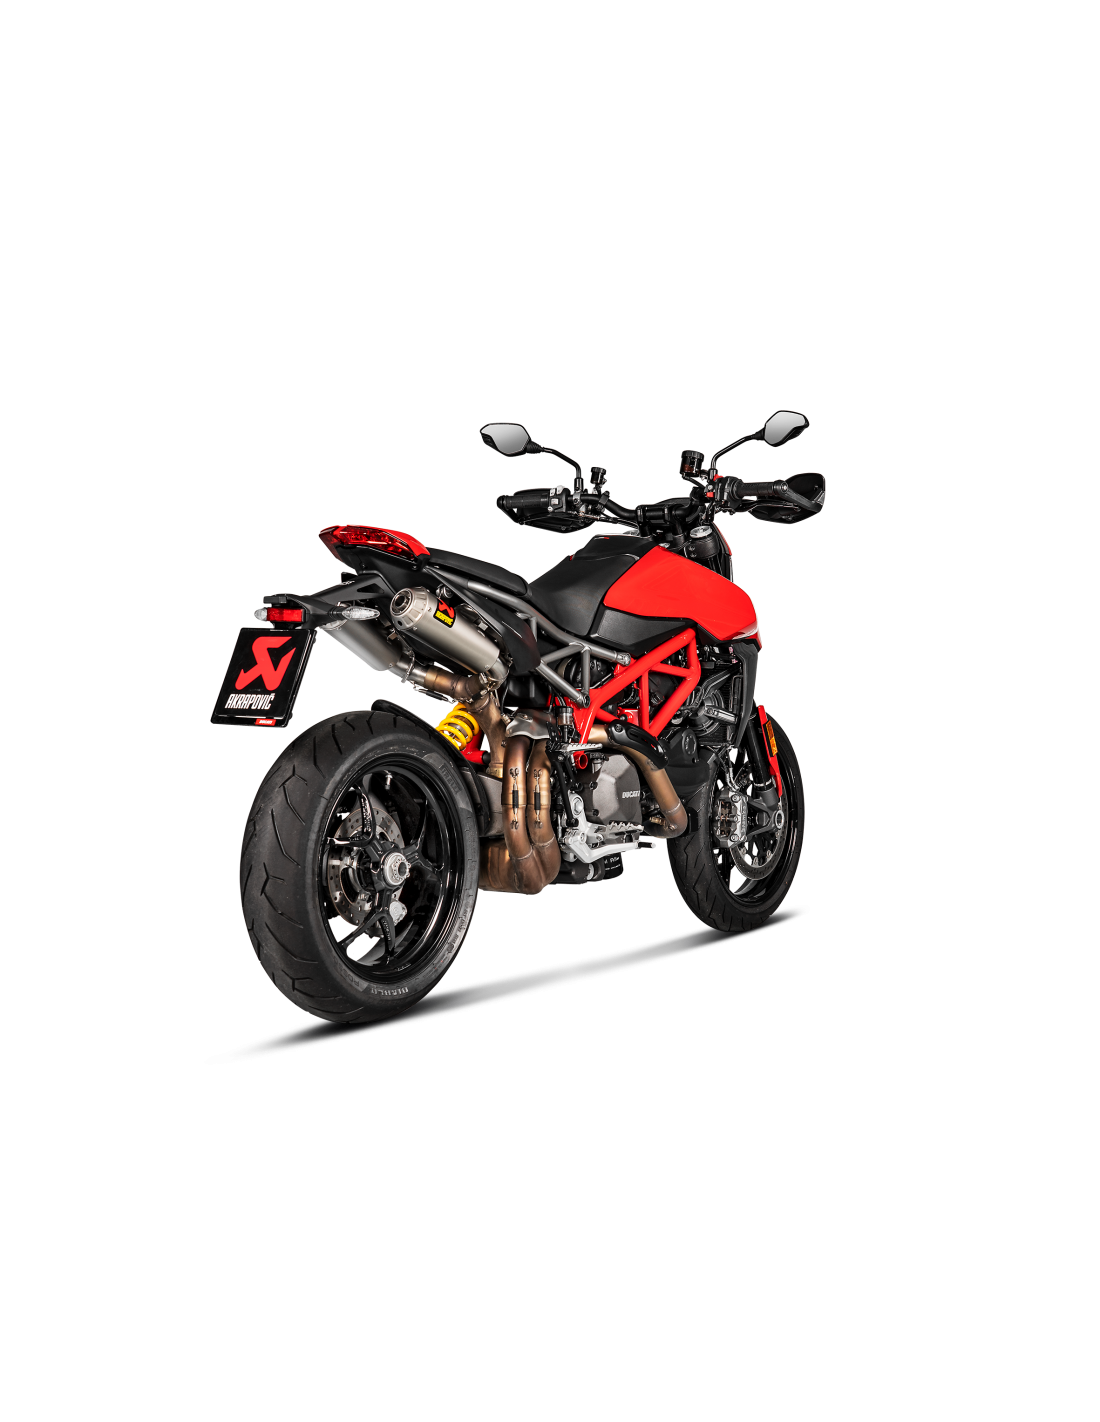 SILENCIEUX AKRAPOVIC - Ducati Store